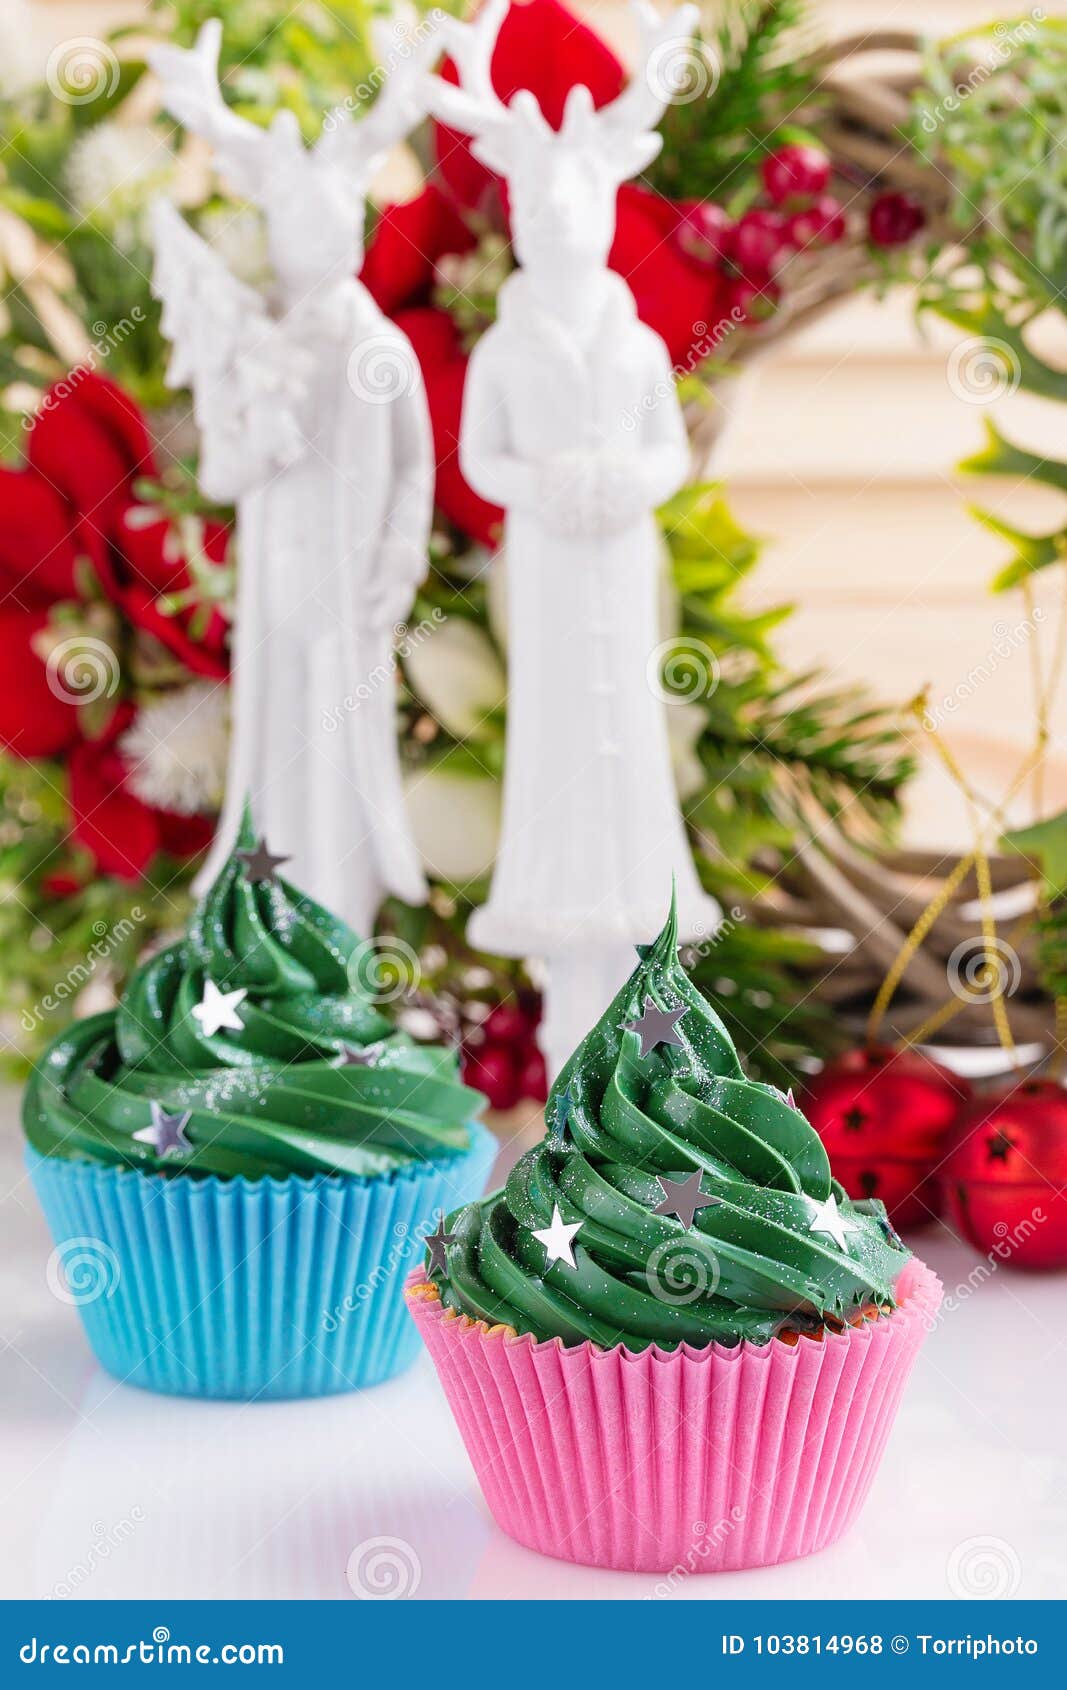 14 Super-Festive Christmas Cupcakes